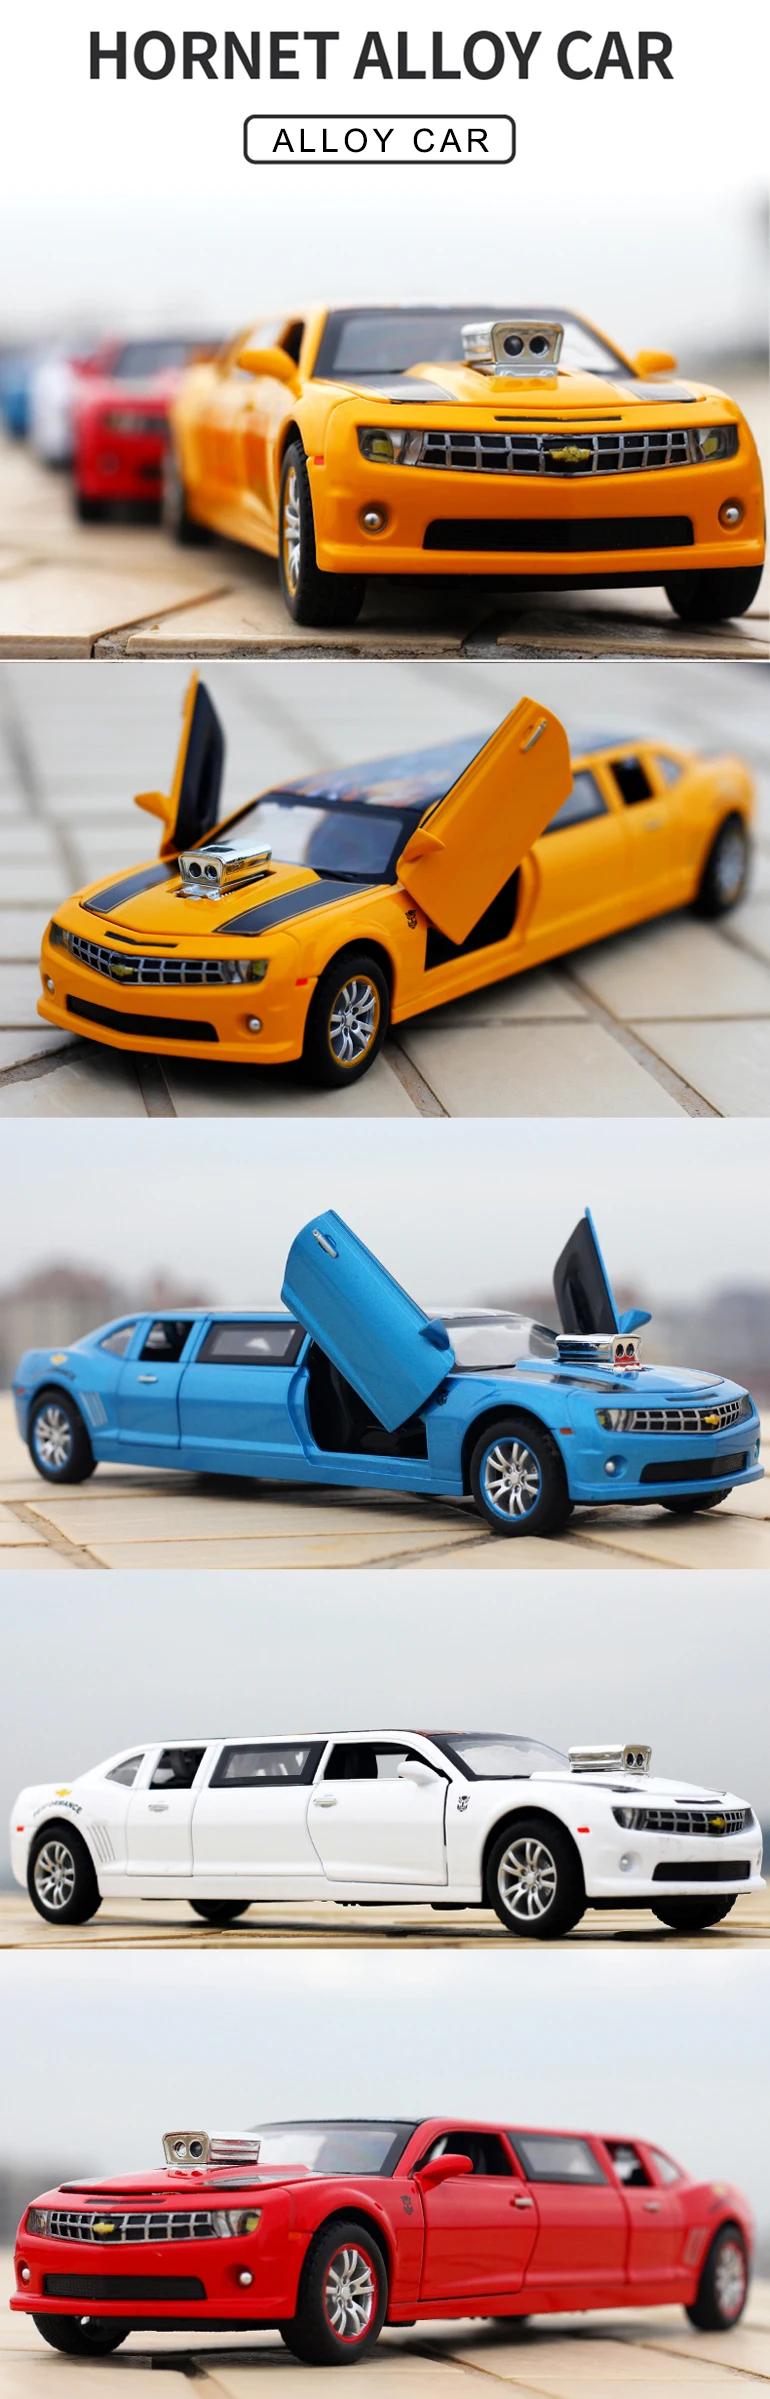 Chengji diecast toy vehicles model cars 1 32 scale die cast pull back metal car open door die cast pull back car